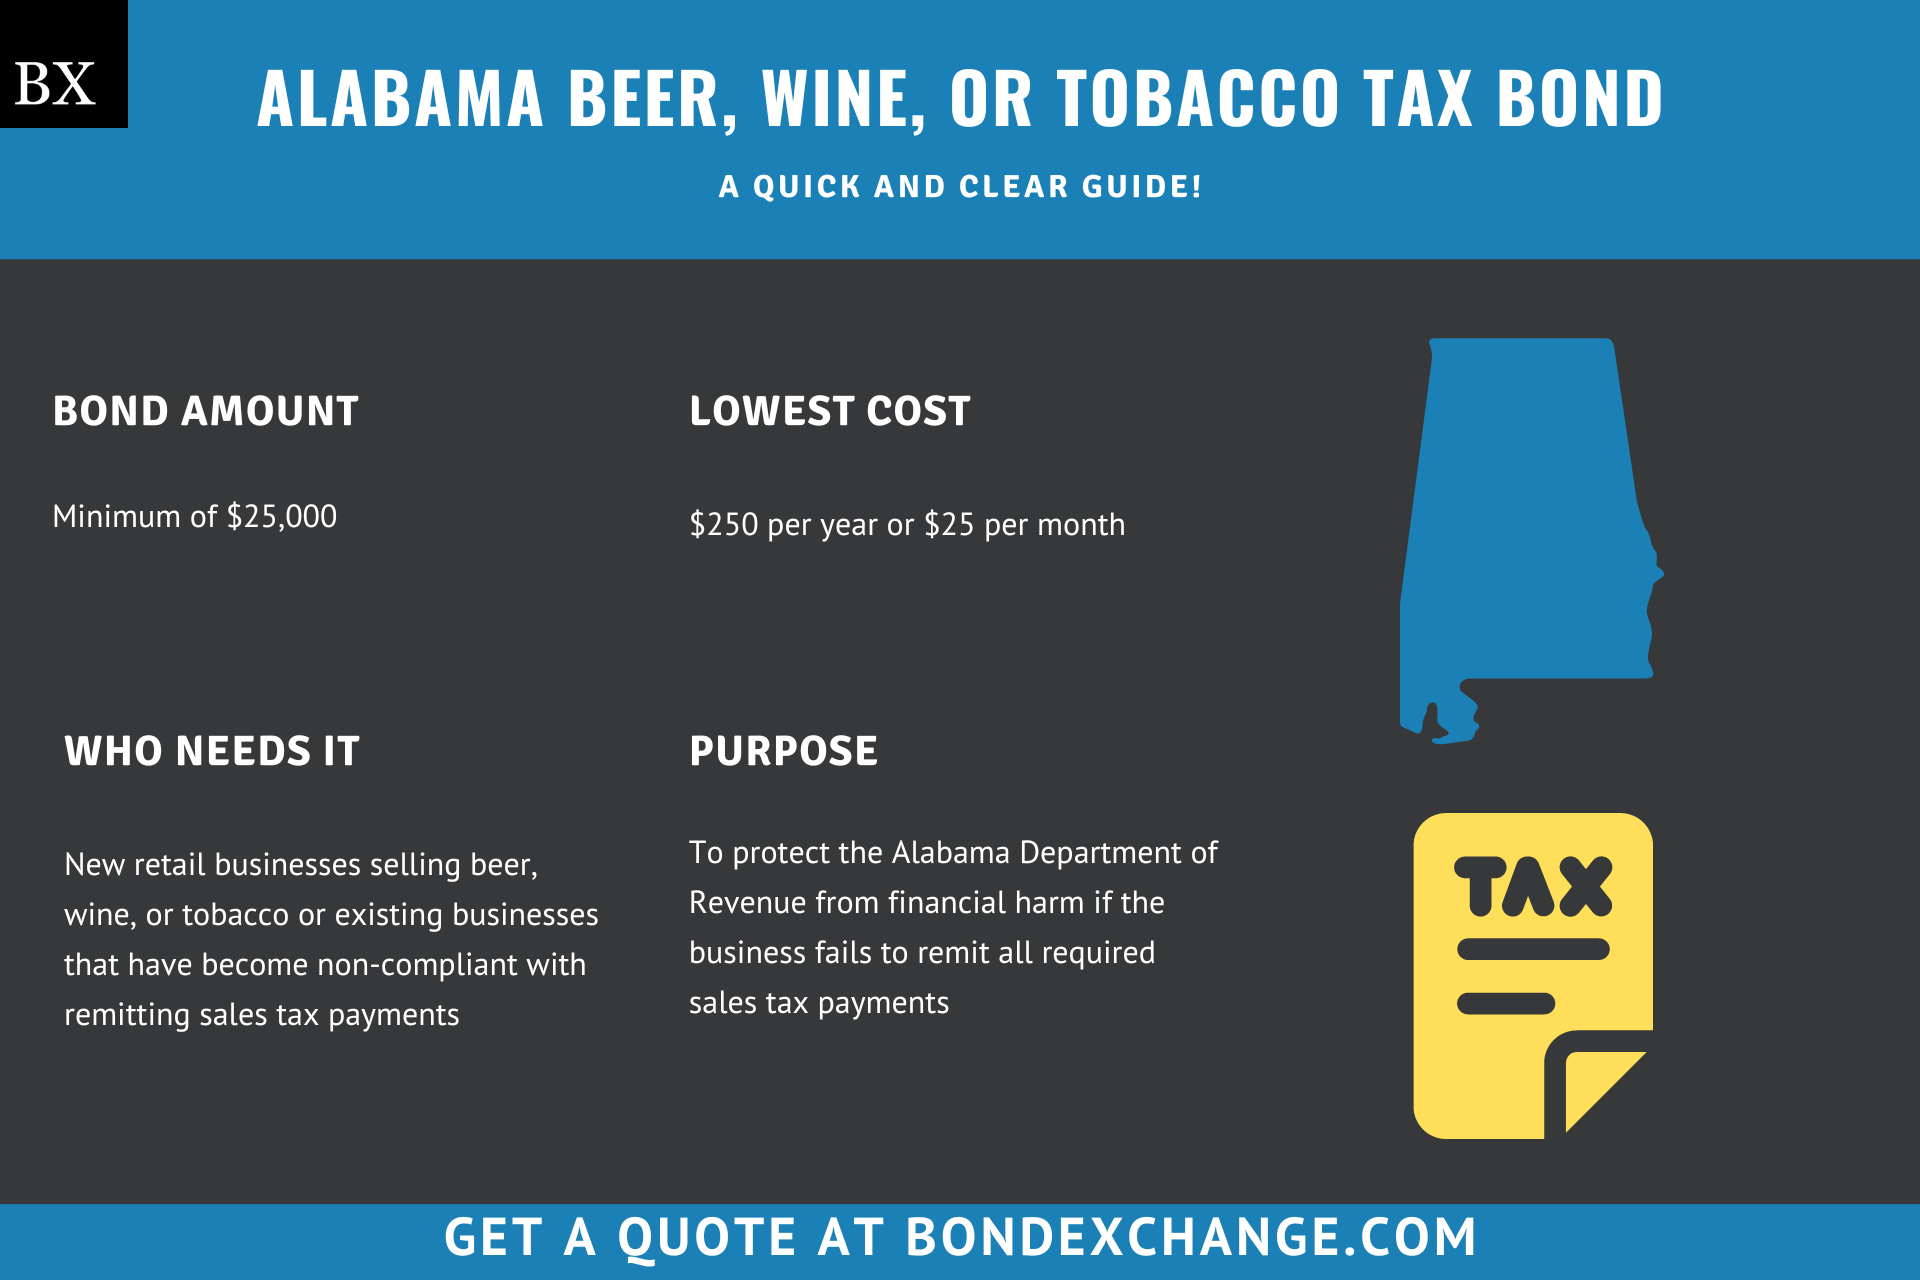 Alabama Beer, Wine, or Tobacco Tax Bond